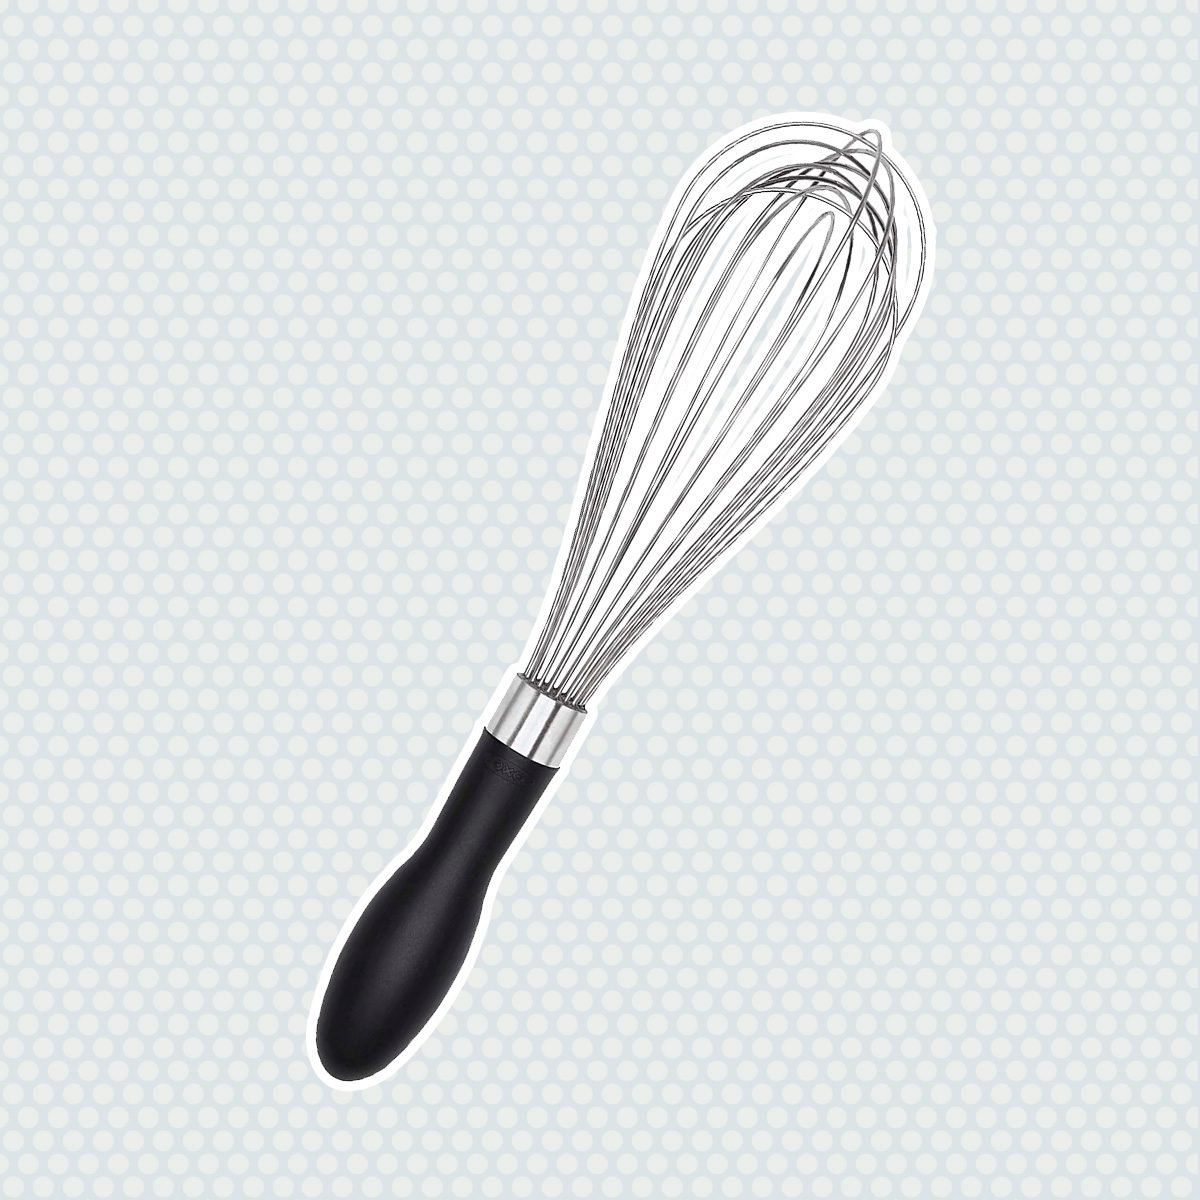 https://www.tasteofhome.com/wp-content/uploads/2021/07/OXO-Grips-11-Inch-Better-Balloon-whisk-pancake-tools.jpg?fit=700%2C700